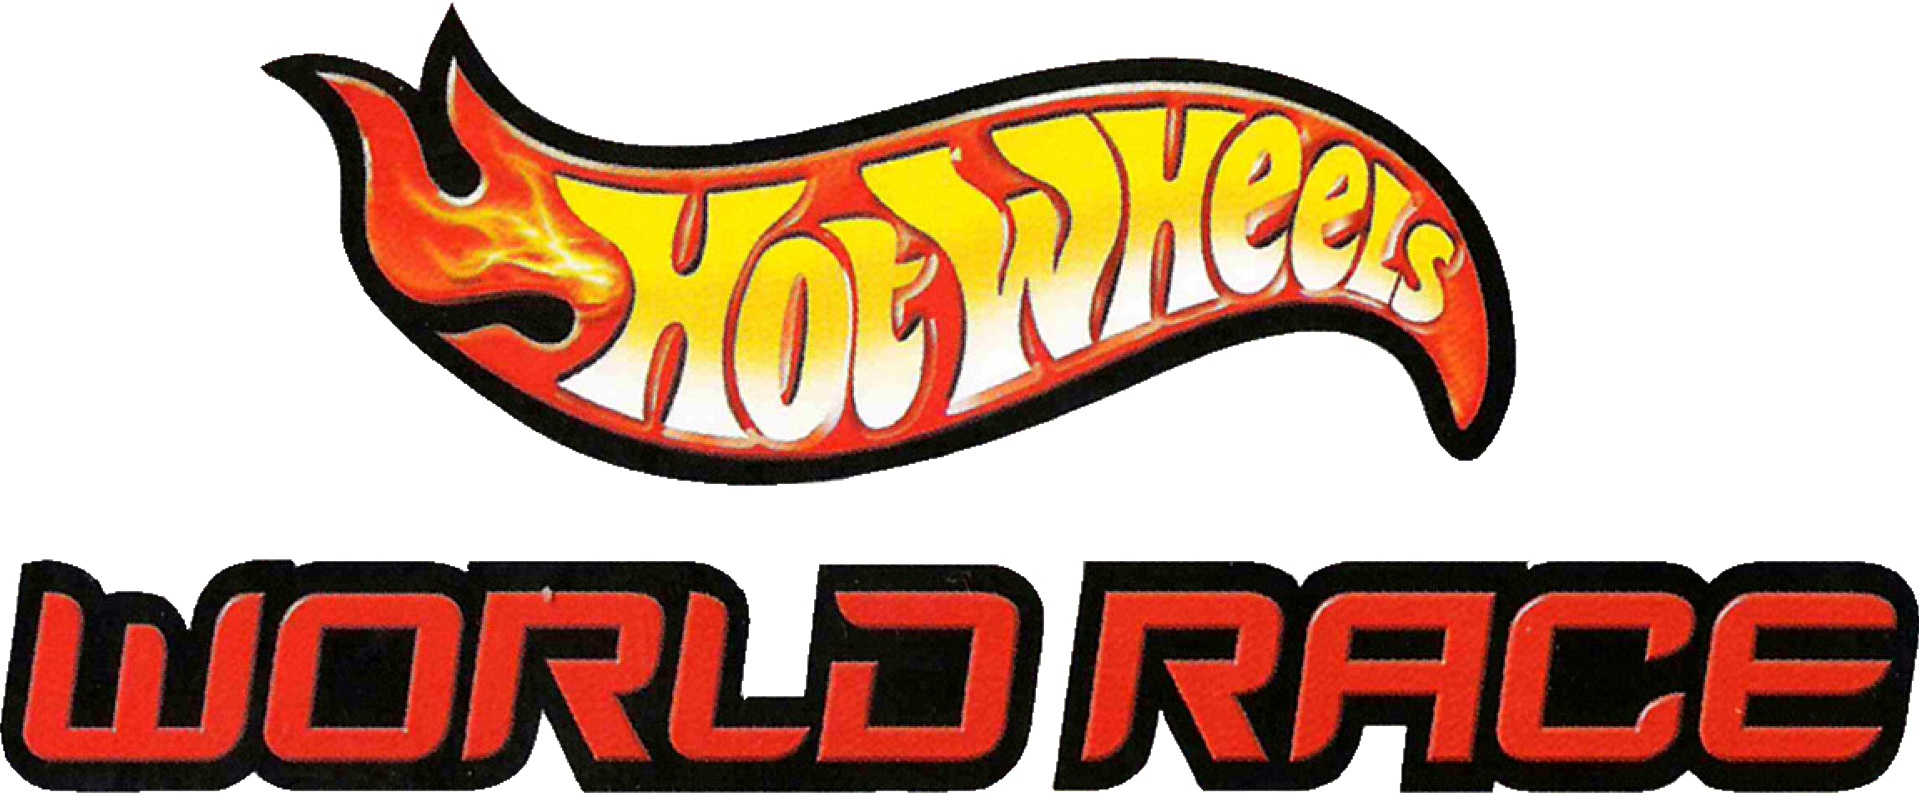 Hot Wheels World Race Logo PNG image